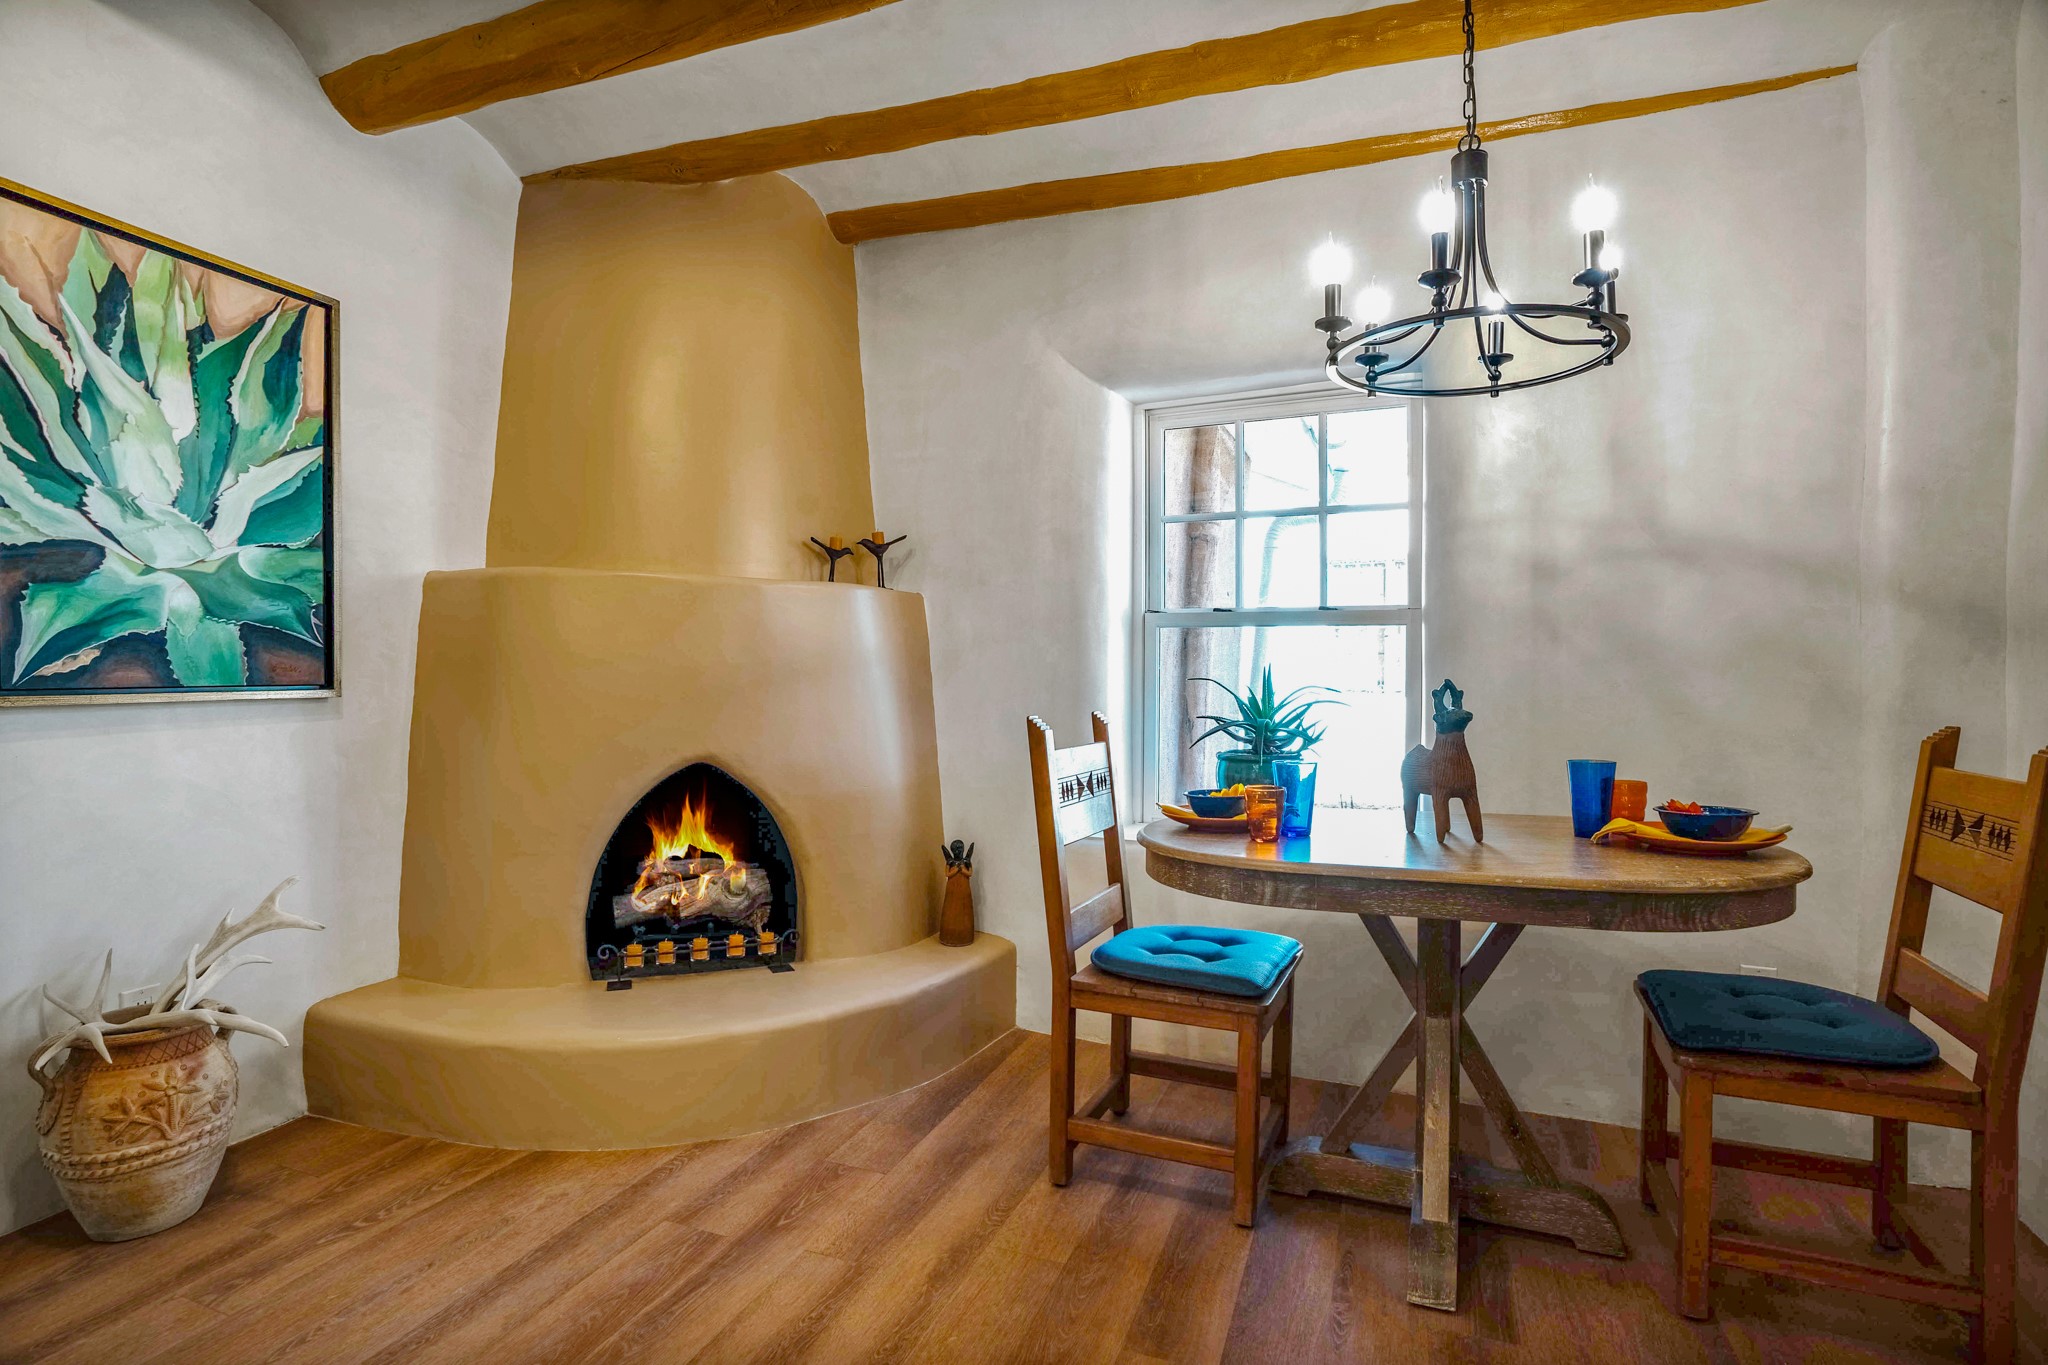 kiva fireplace in main residence kitchen